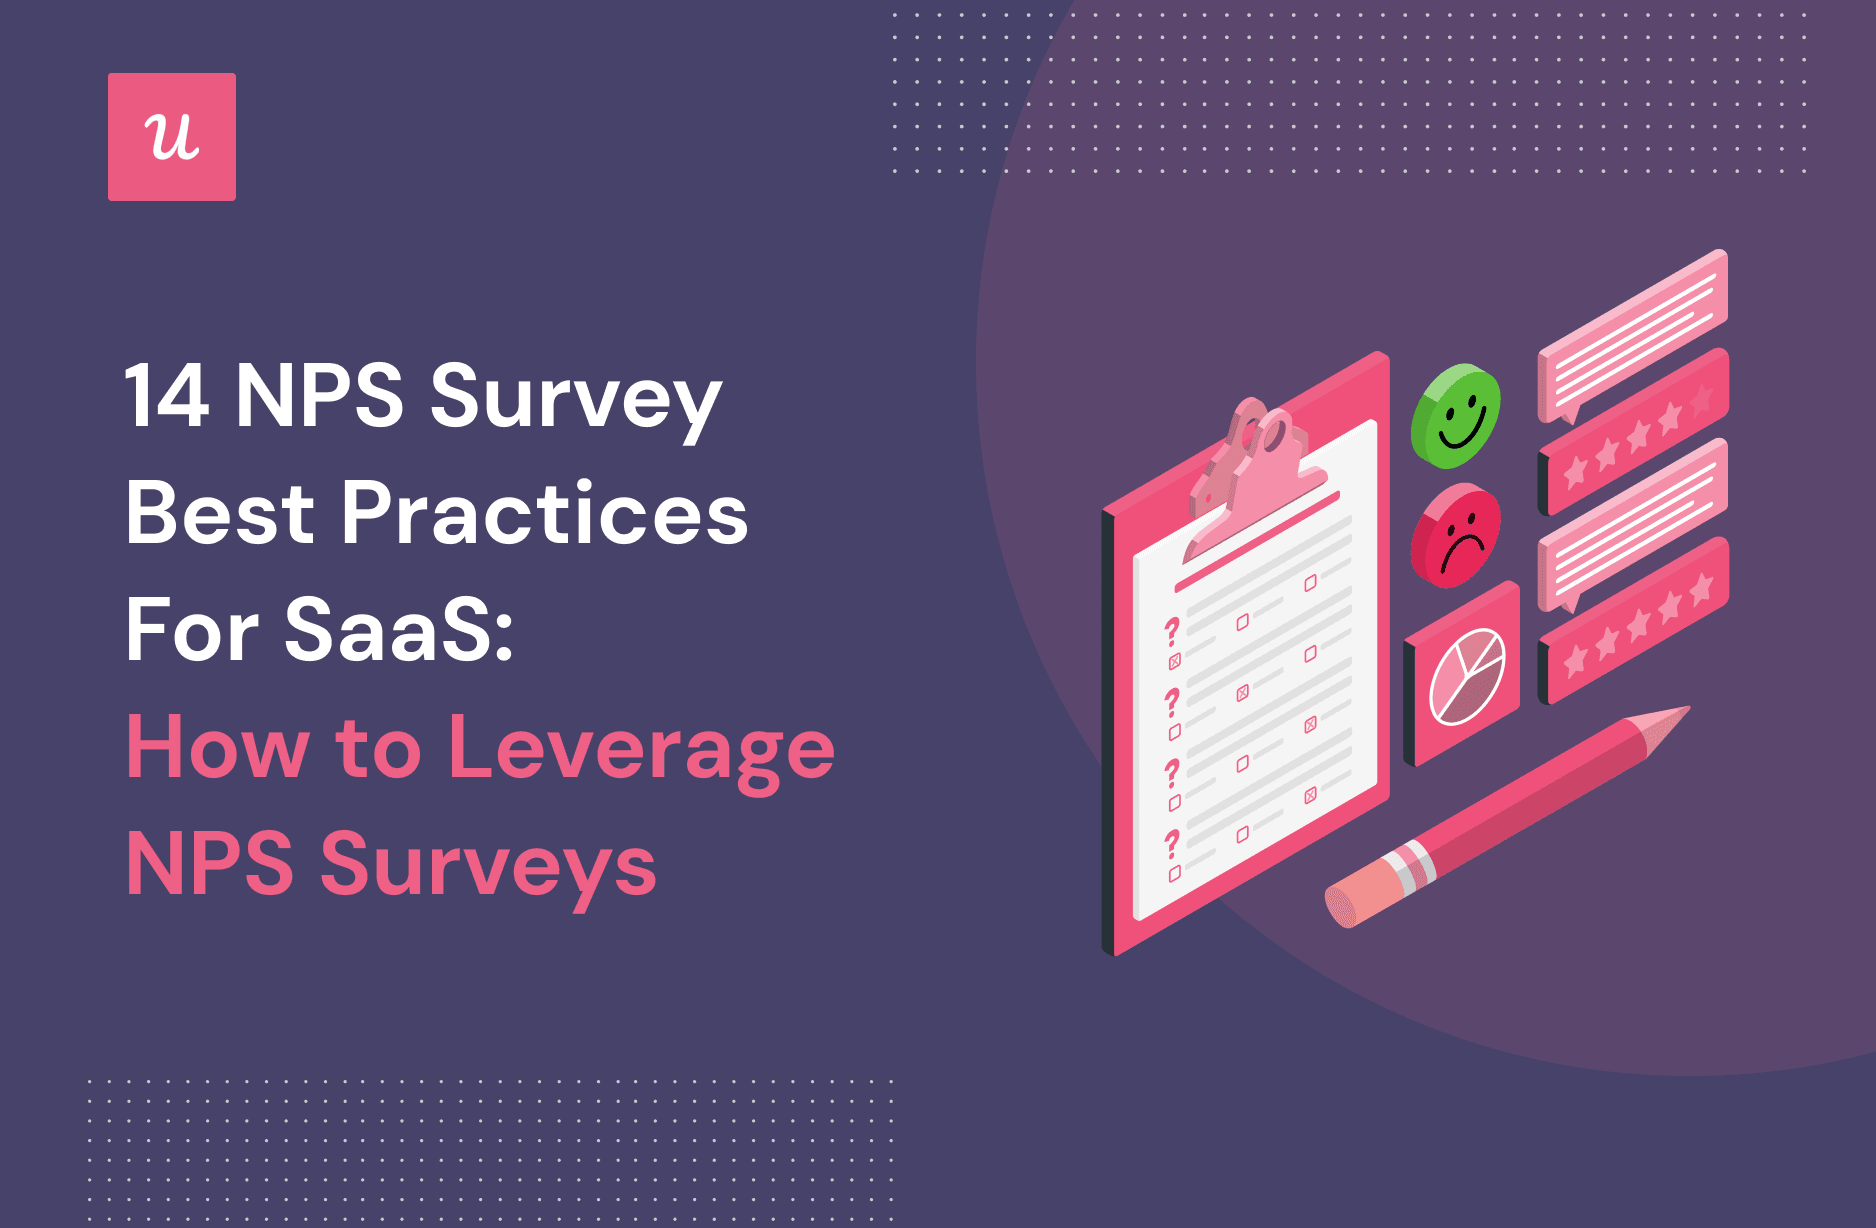 14 NPS Survey Best Practices For SaaS: How to Leverage NPS Surveys